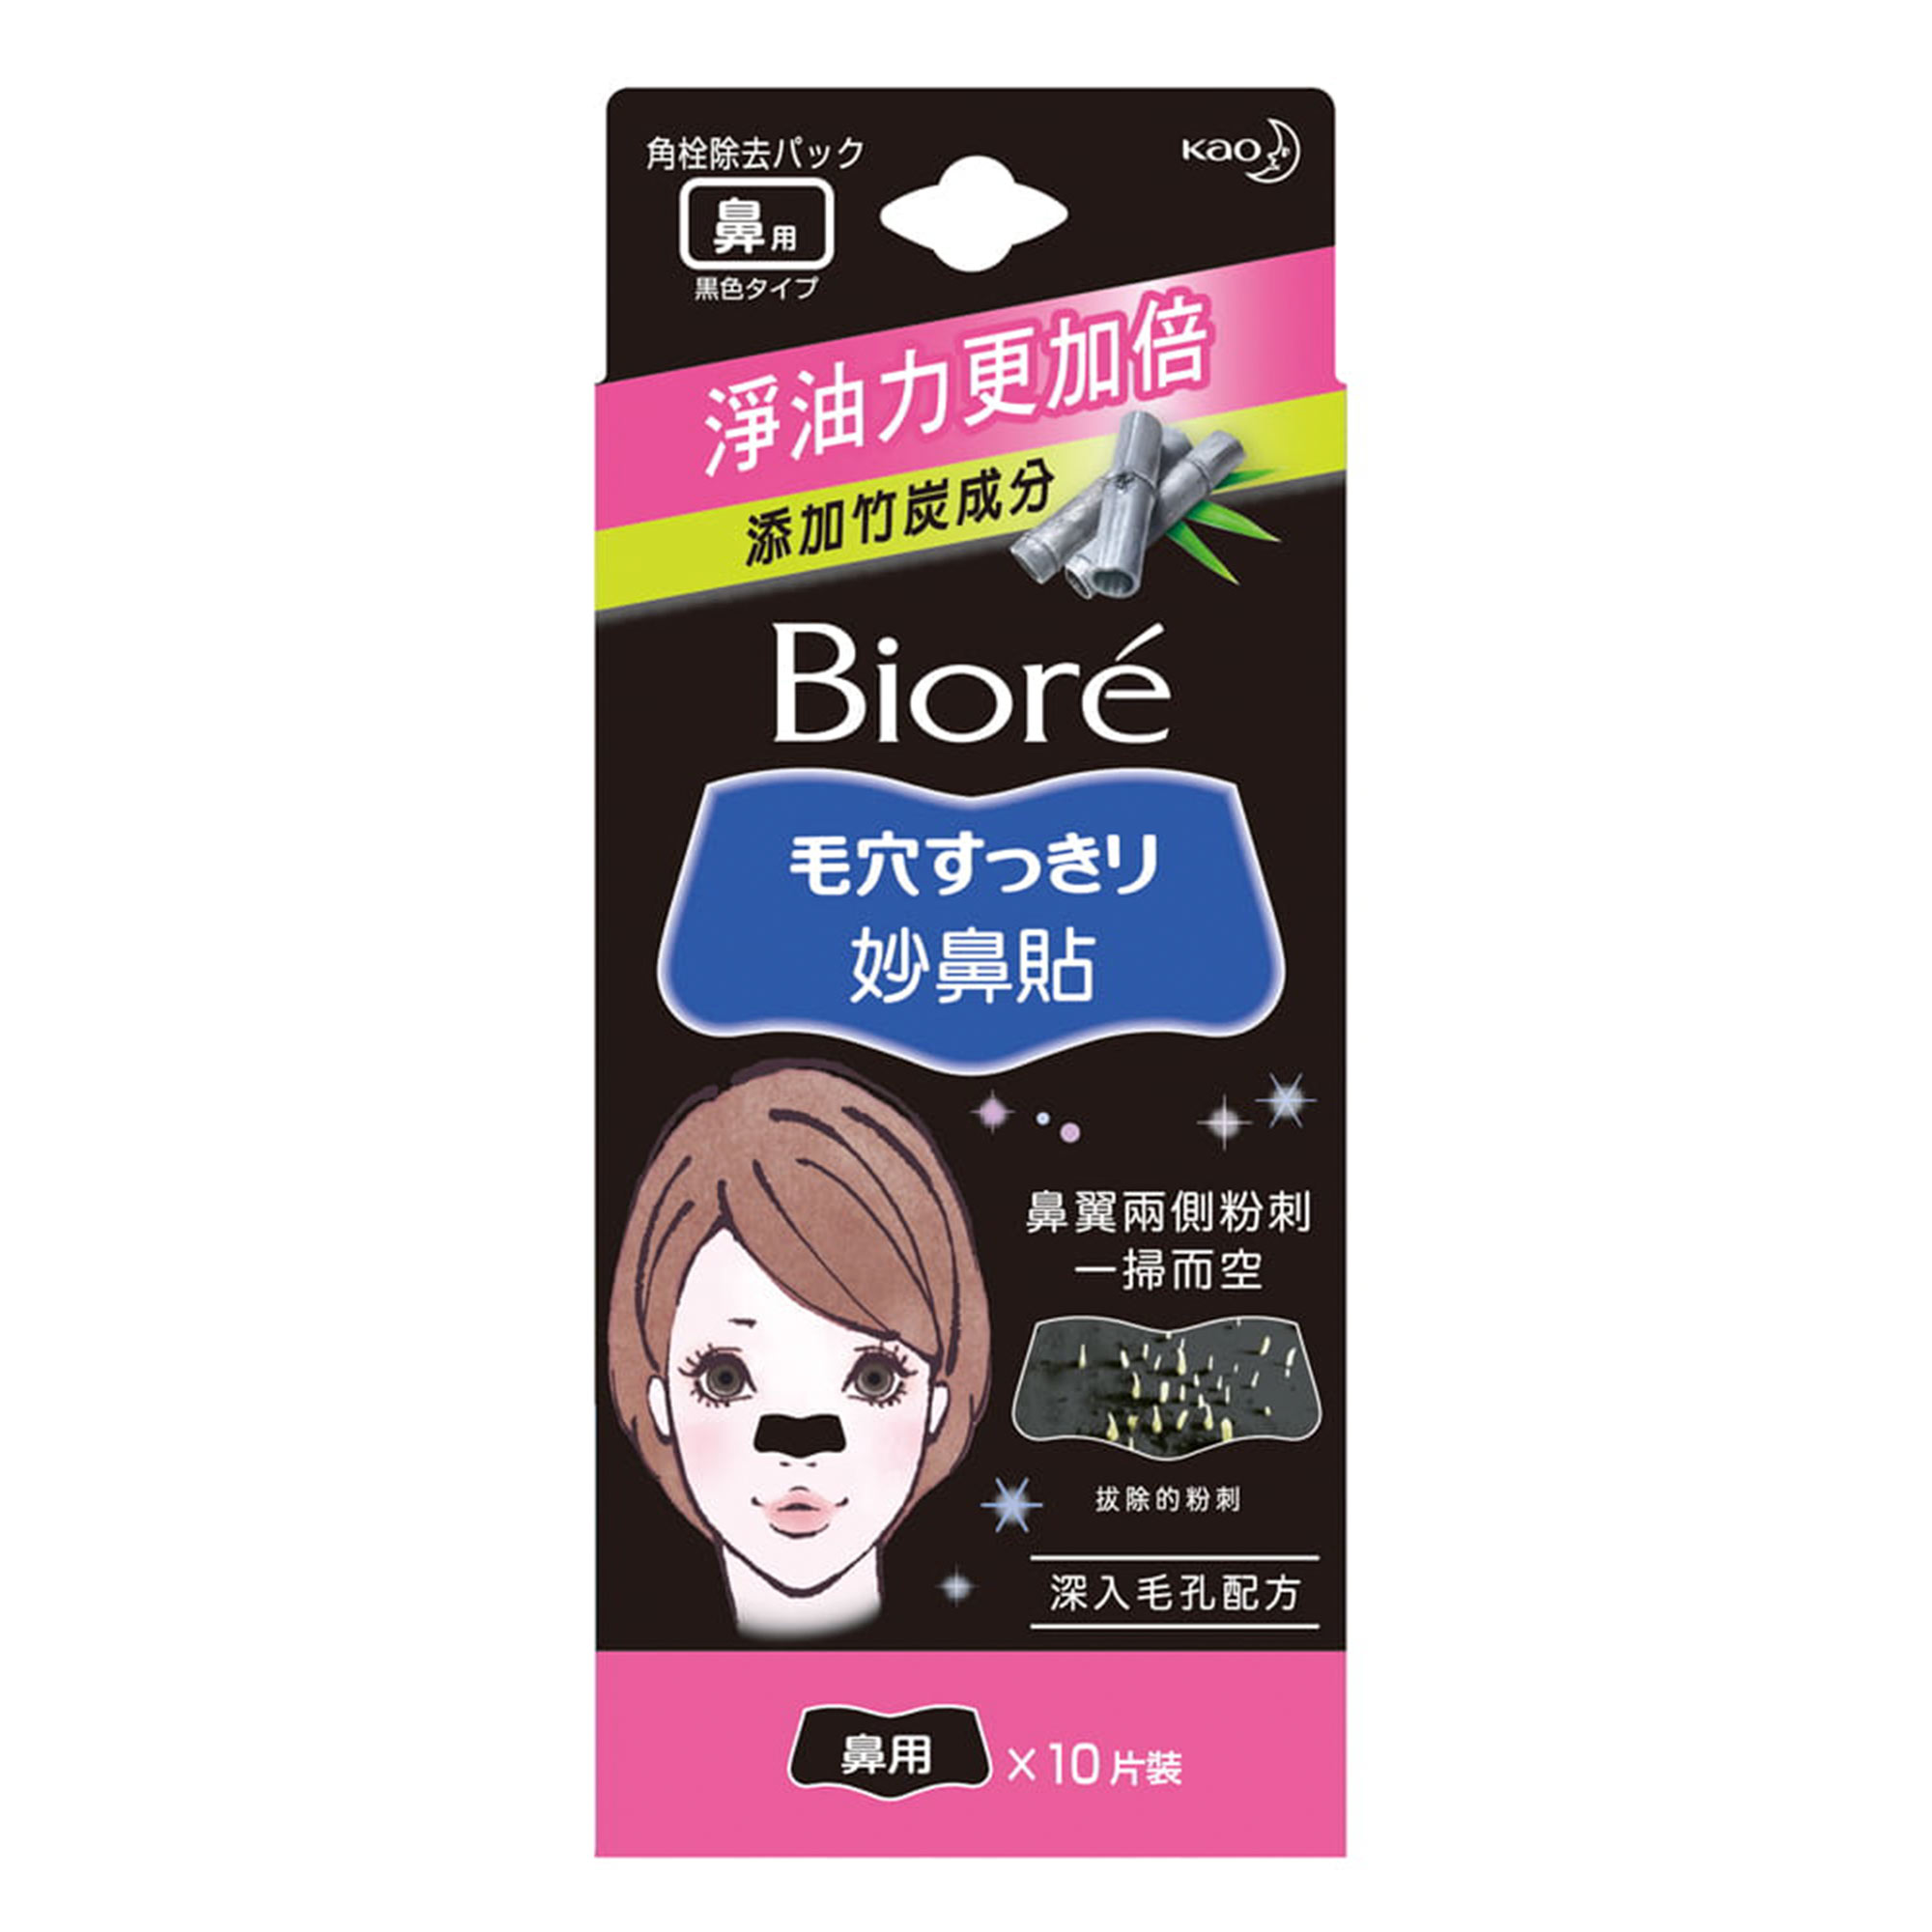 Очищающие полоски для носа Biore  с бамбуковым углем 10 шт пирсинг в крыло носа нострил